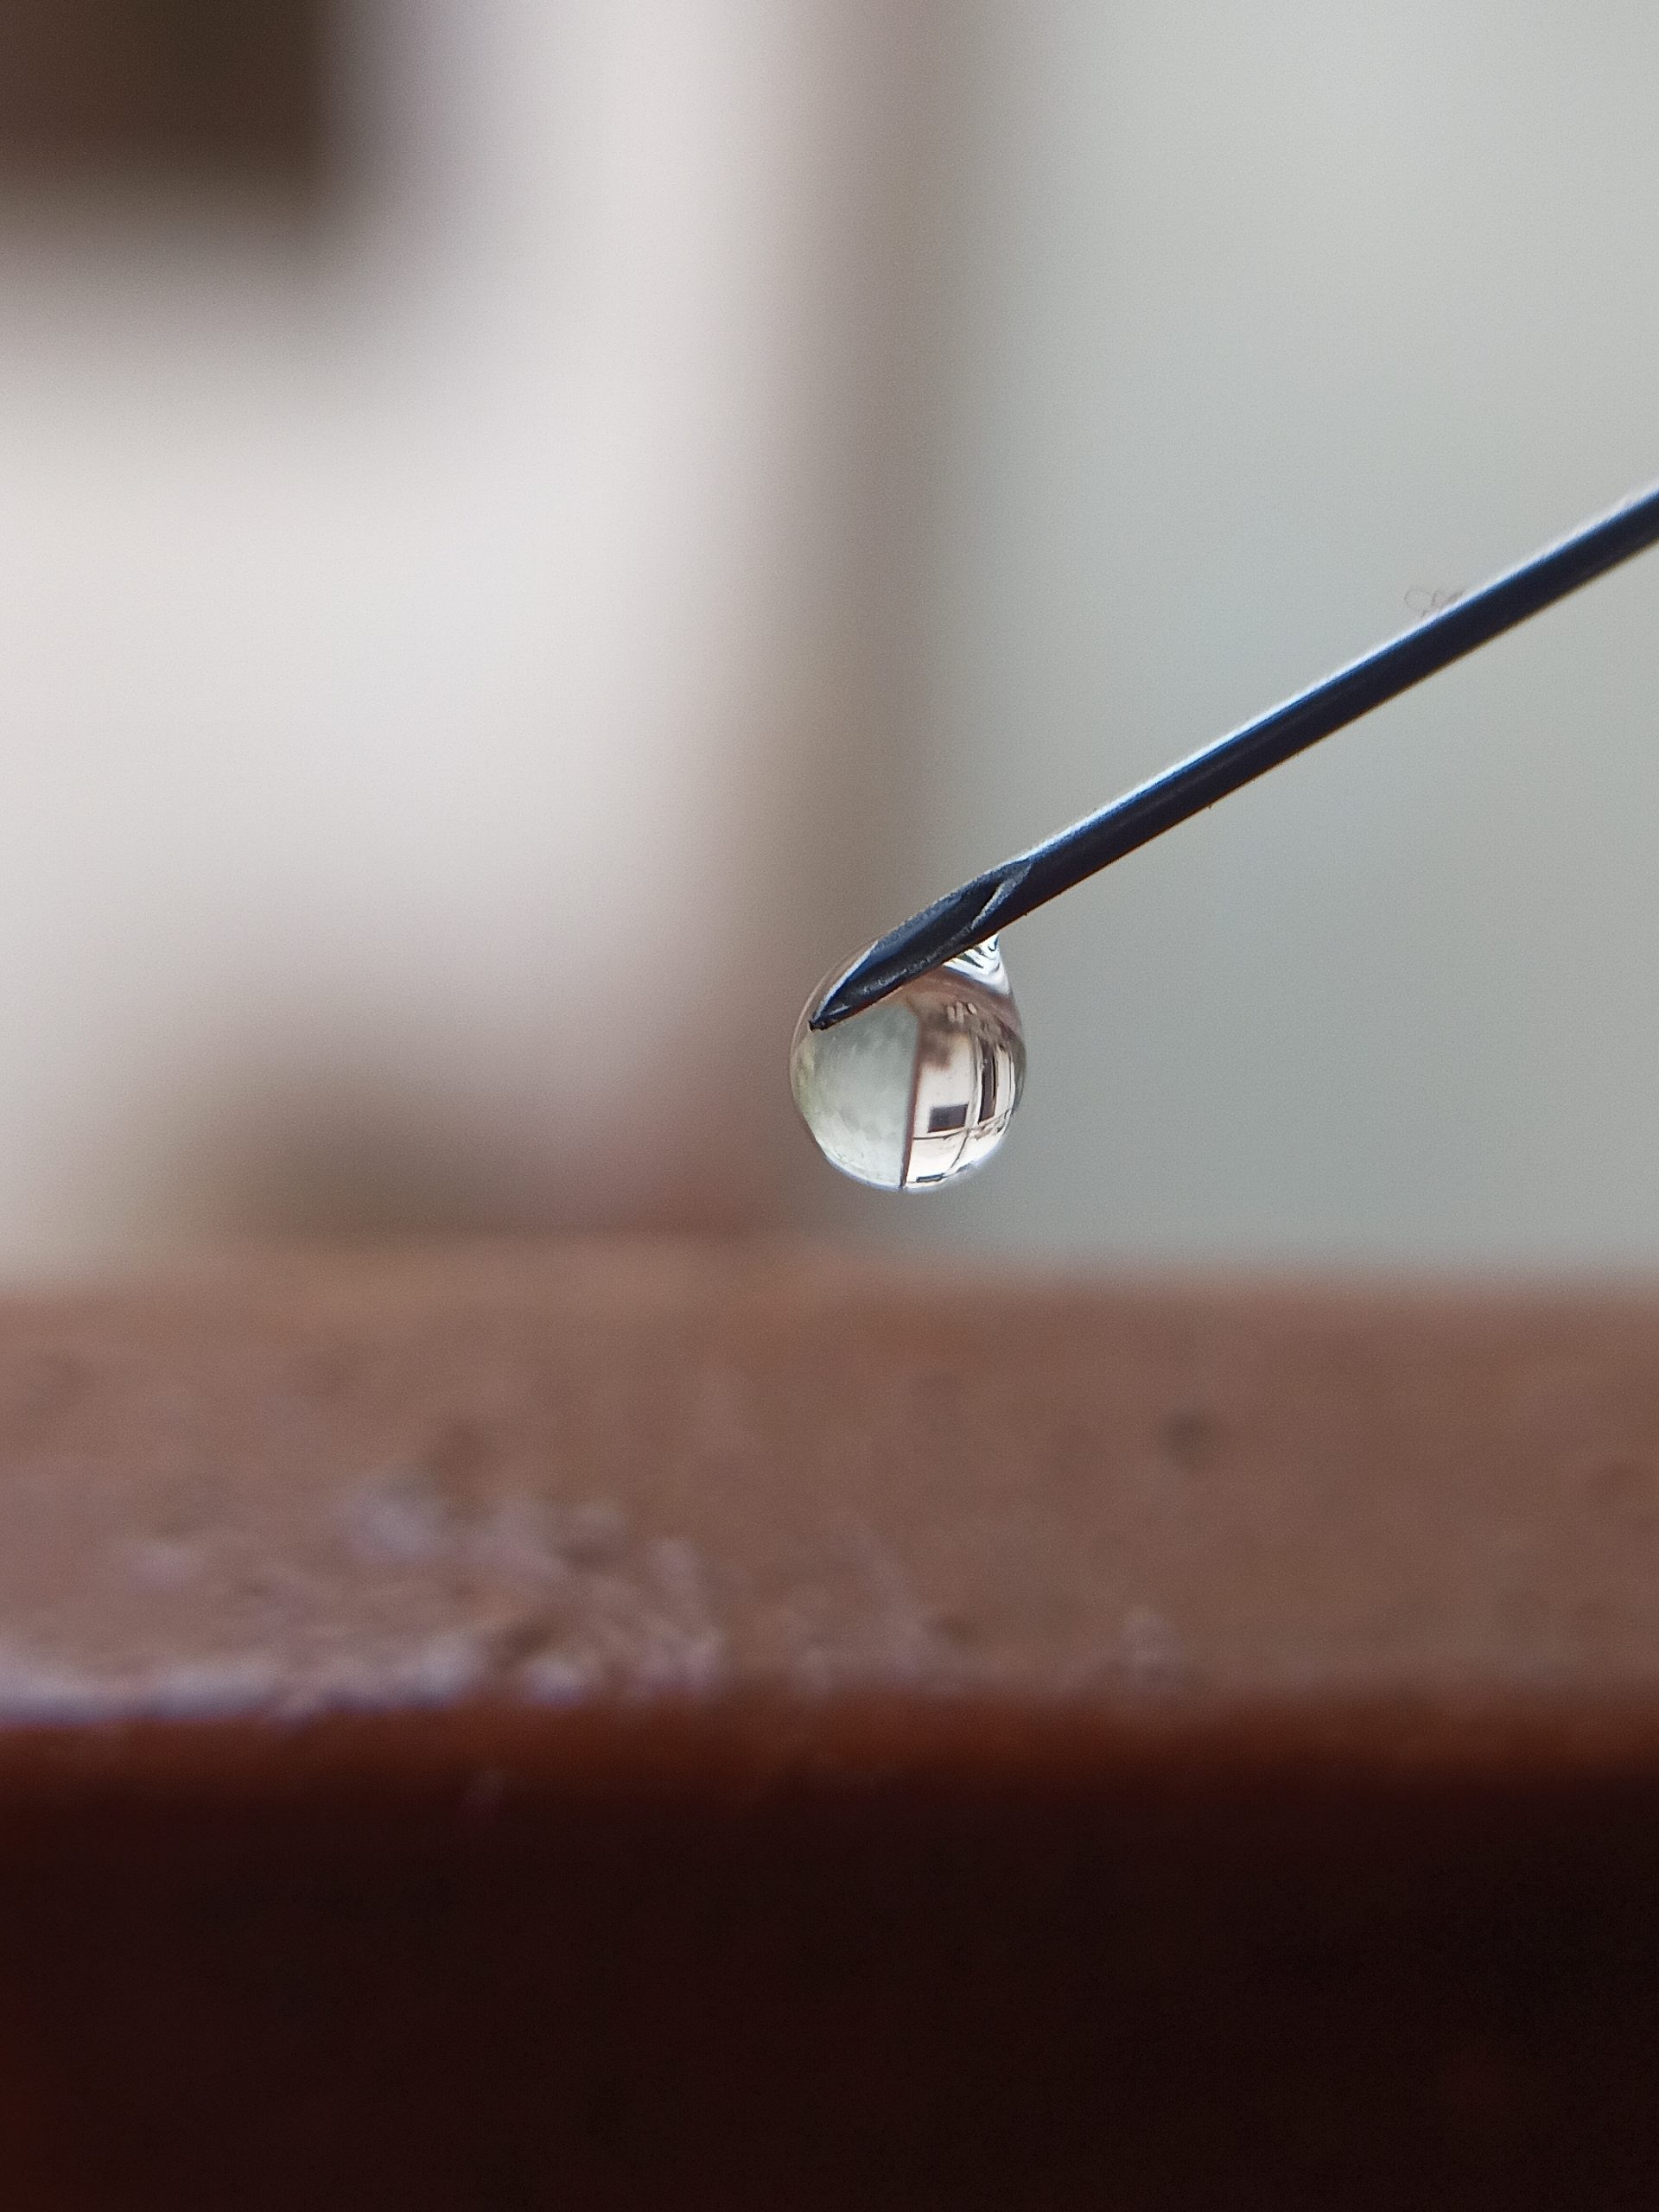 A drop on a needle tip